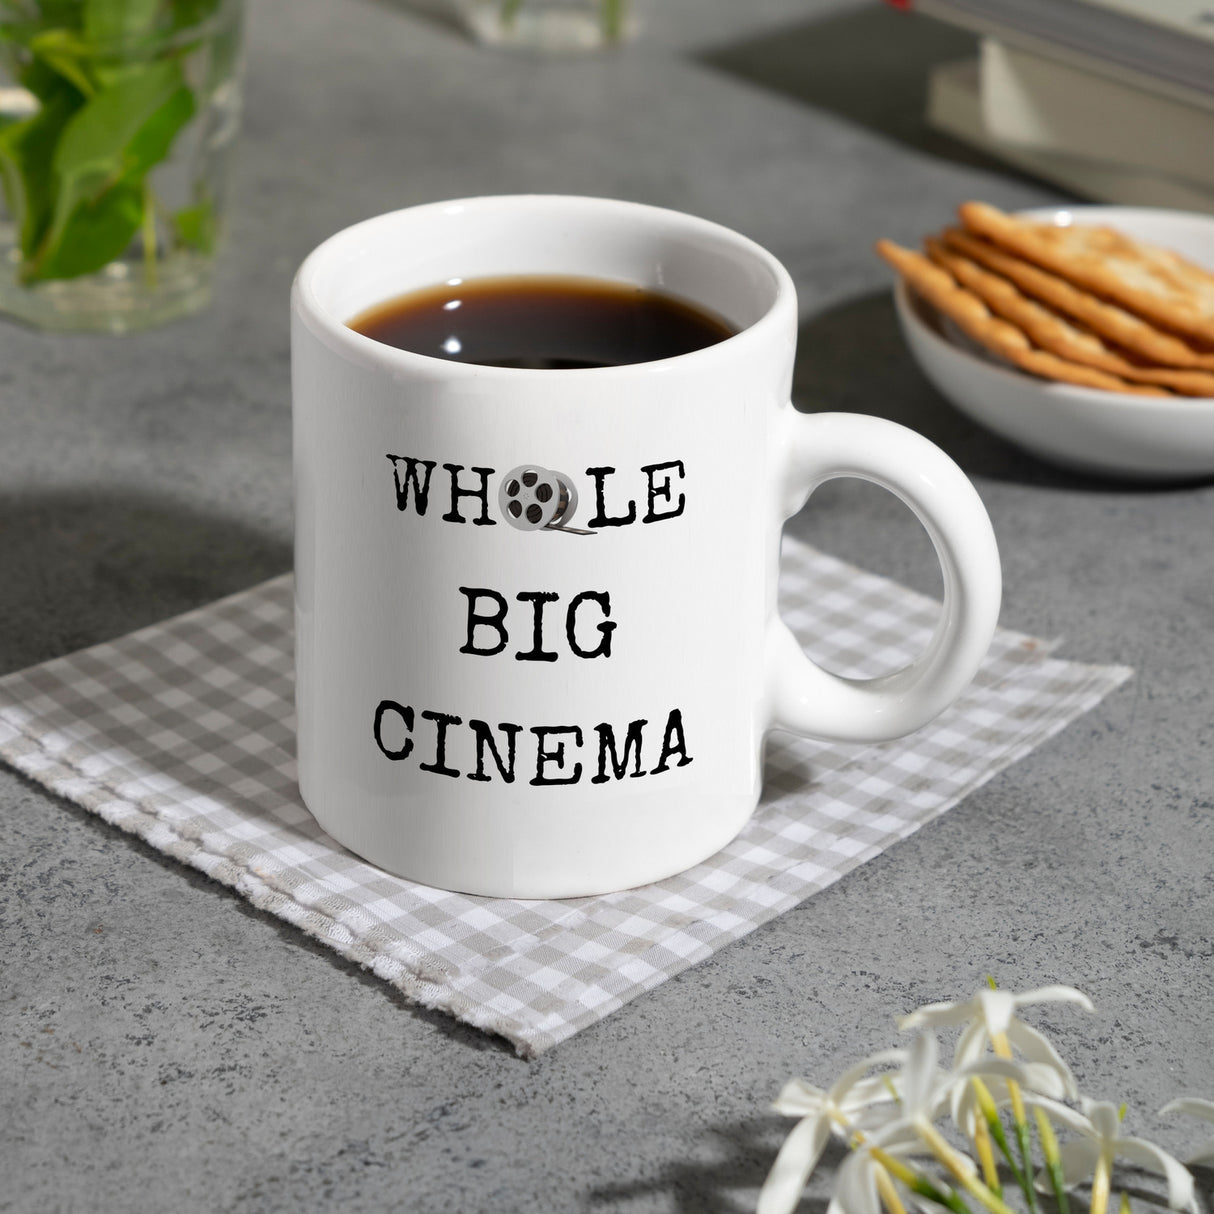 Denglisch Kaffeebecher - Whole big cinema